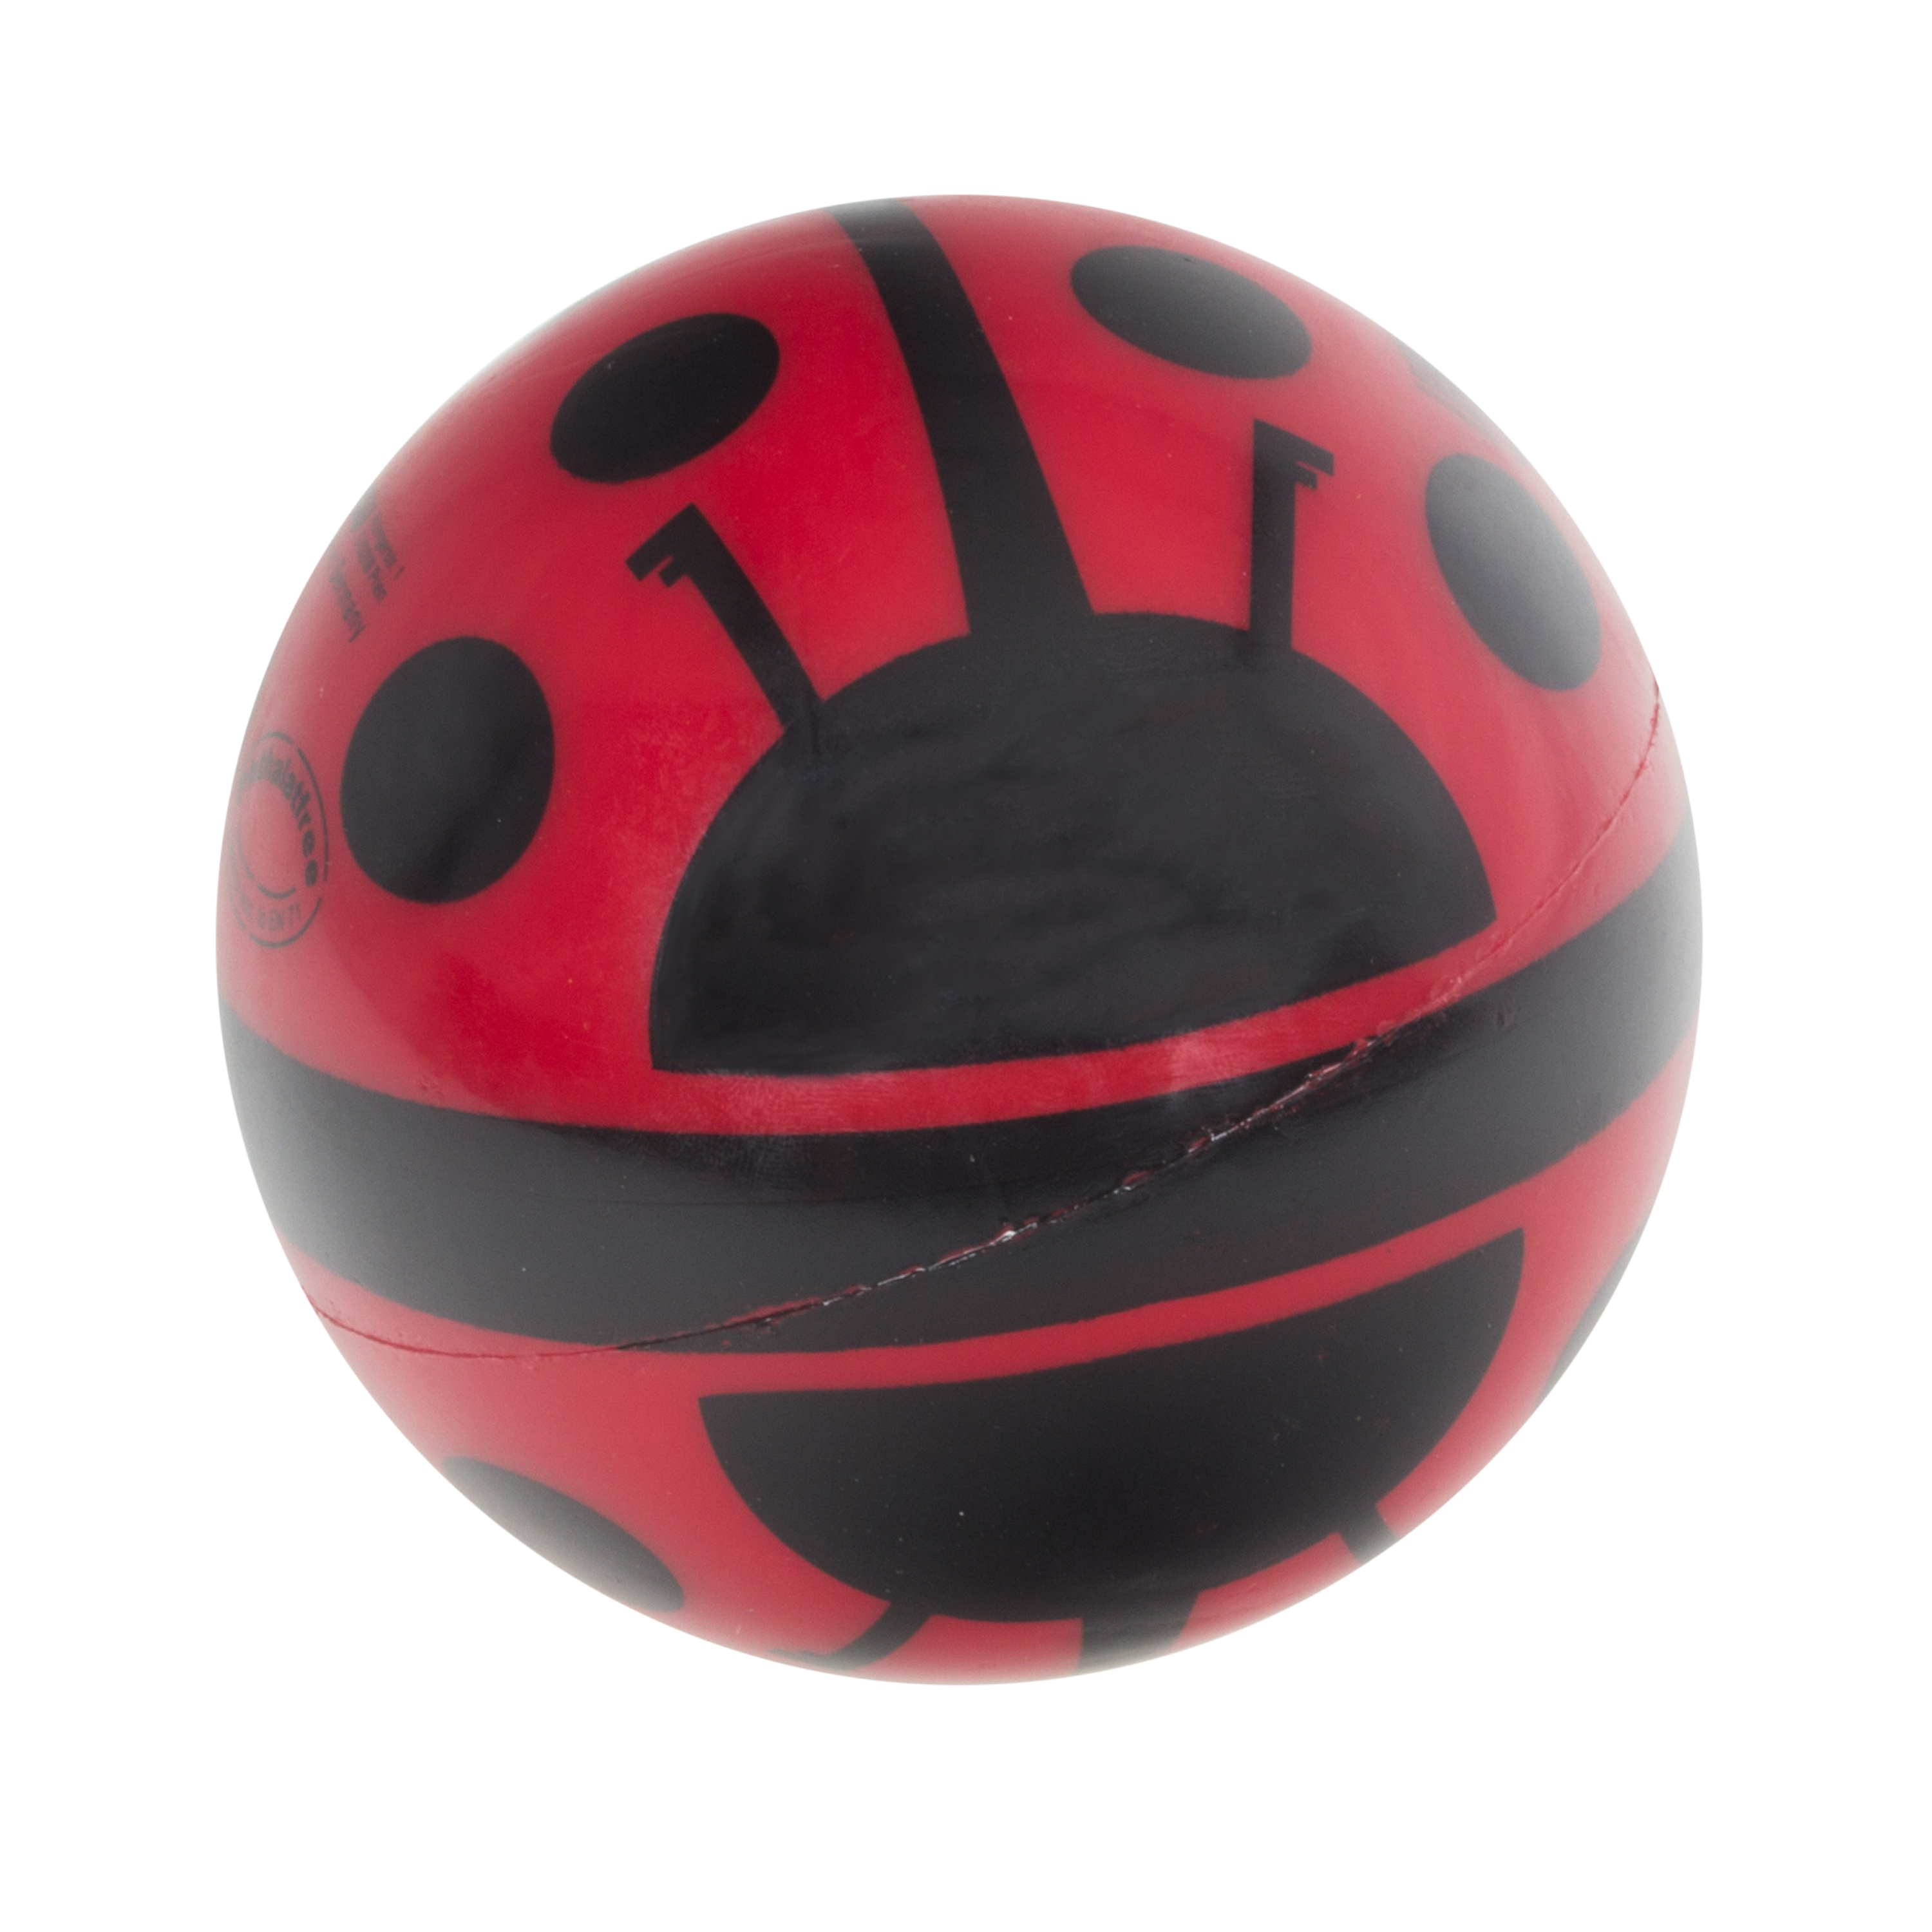 Marienkäferball groß, Ø 23 cm